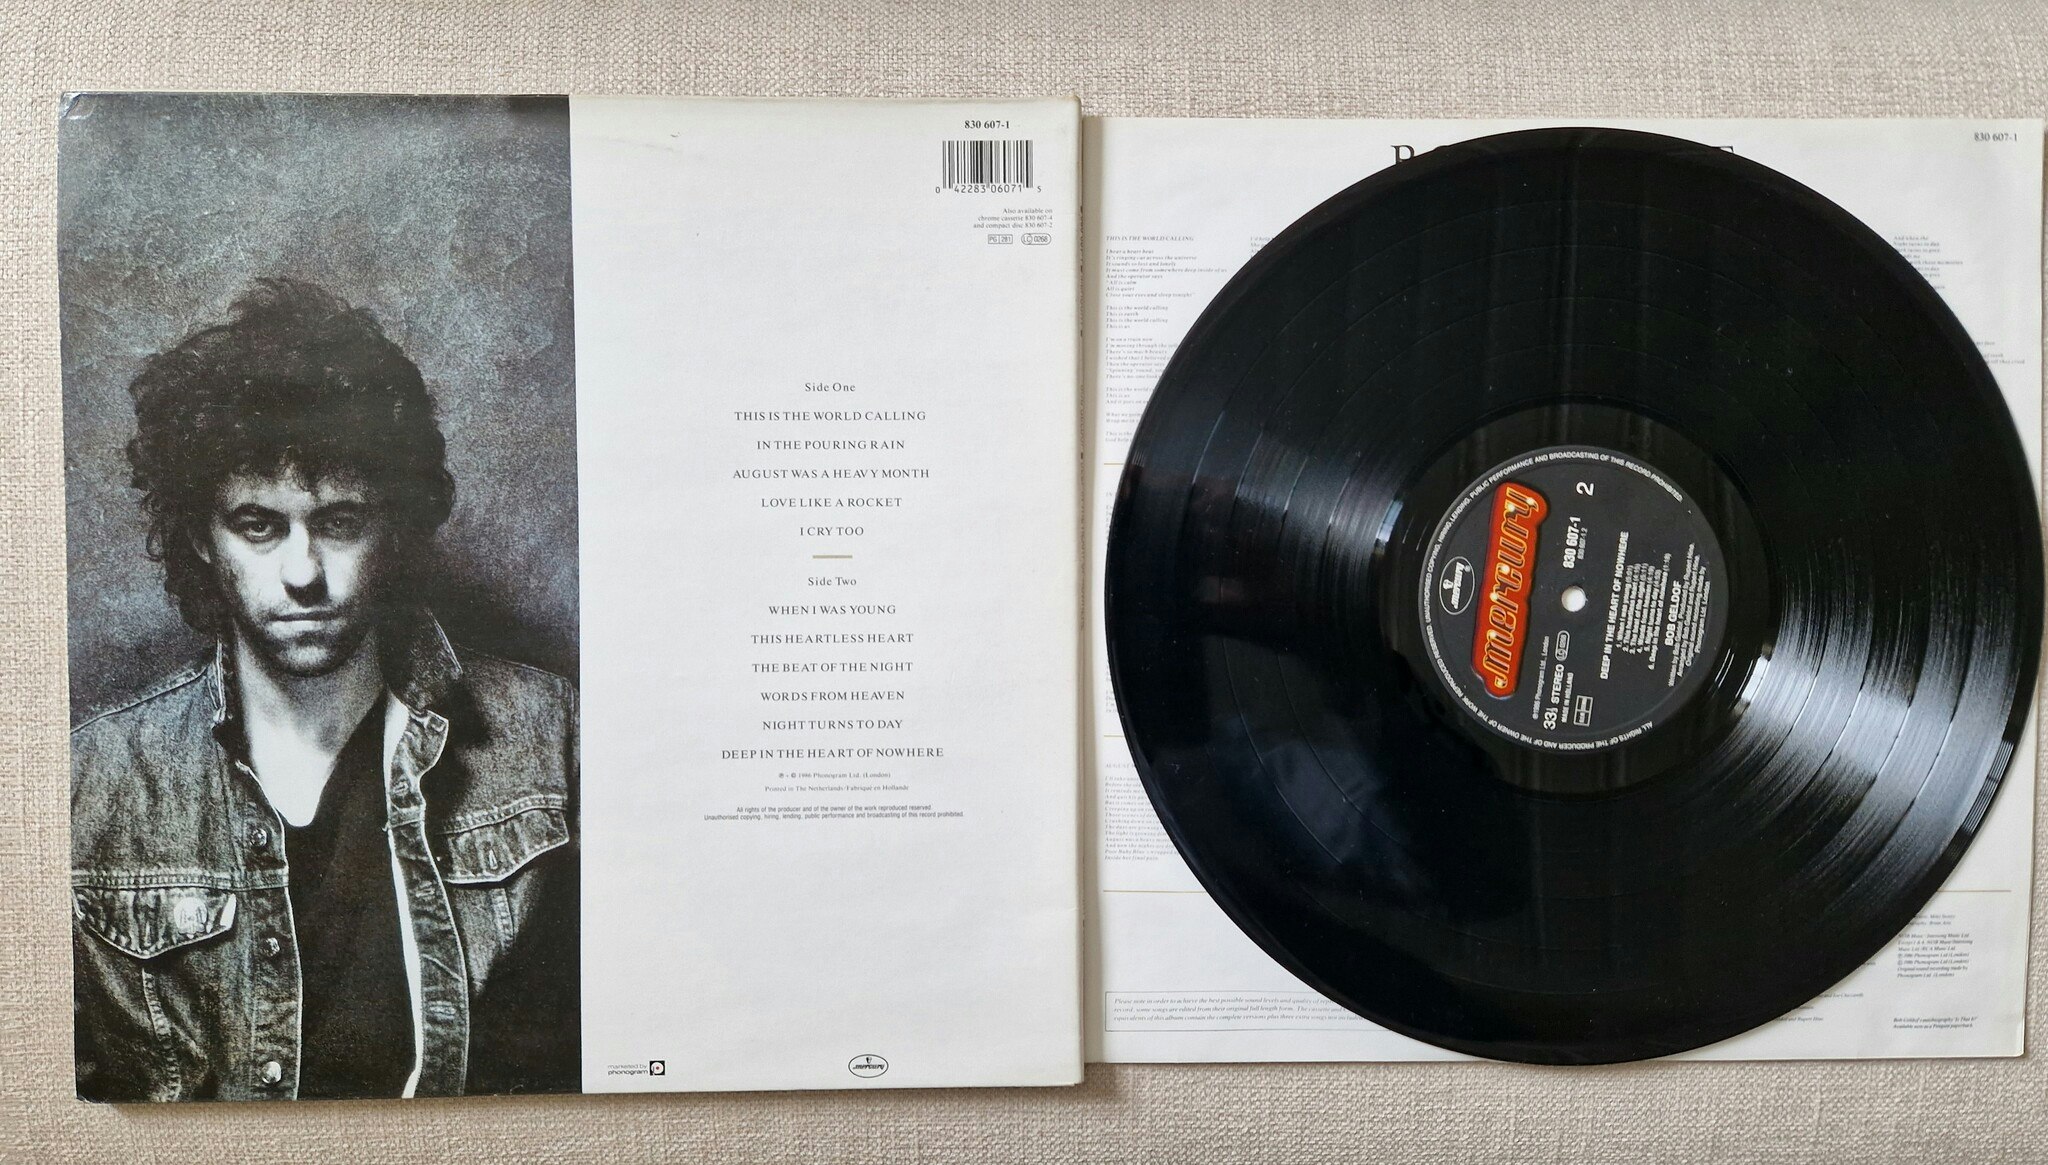 Bob Geldof, Deep in the heart of nowhere. Vinyl LP